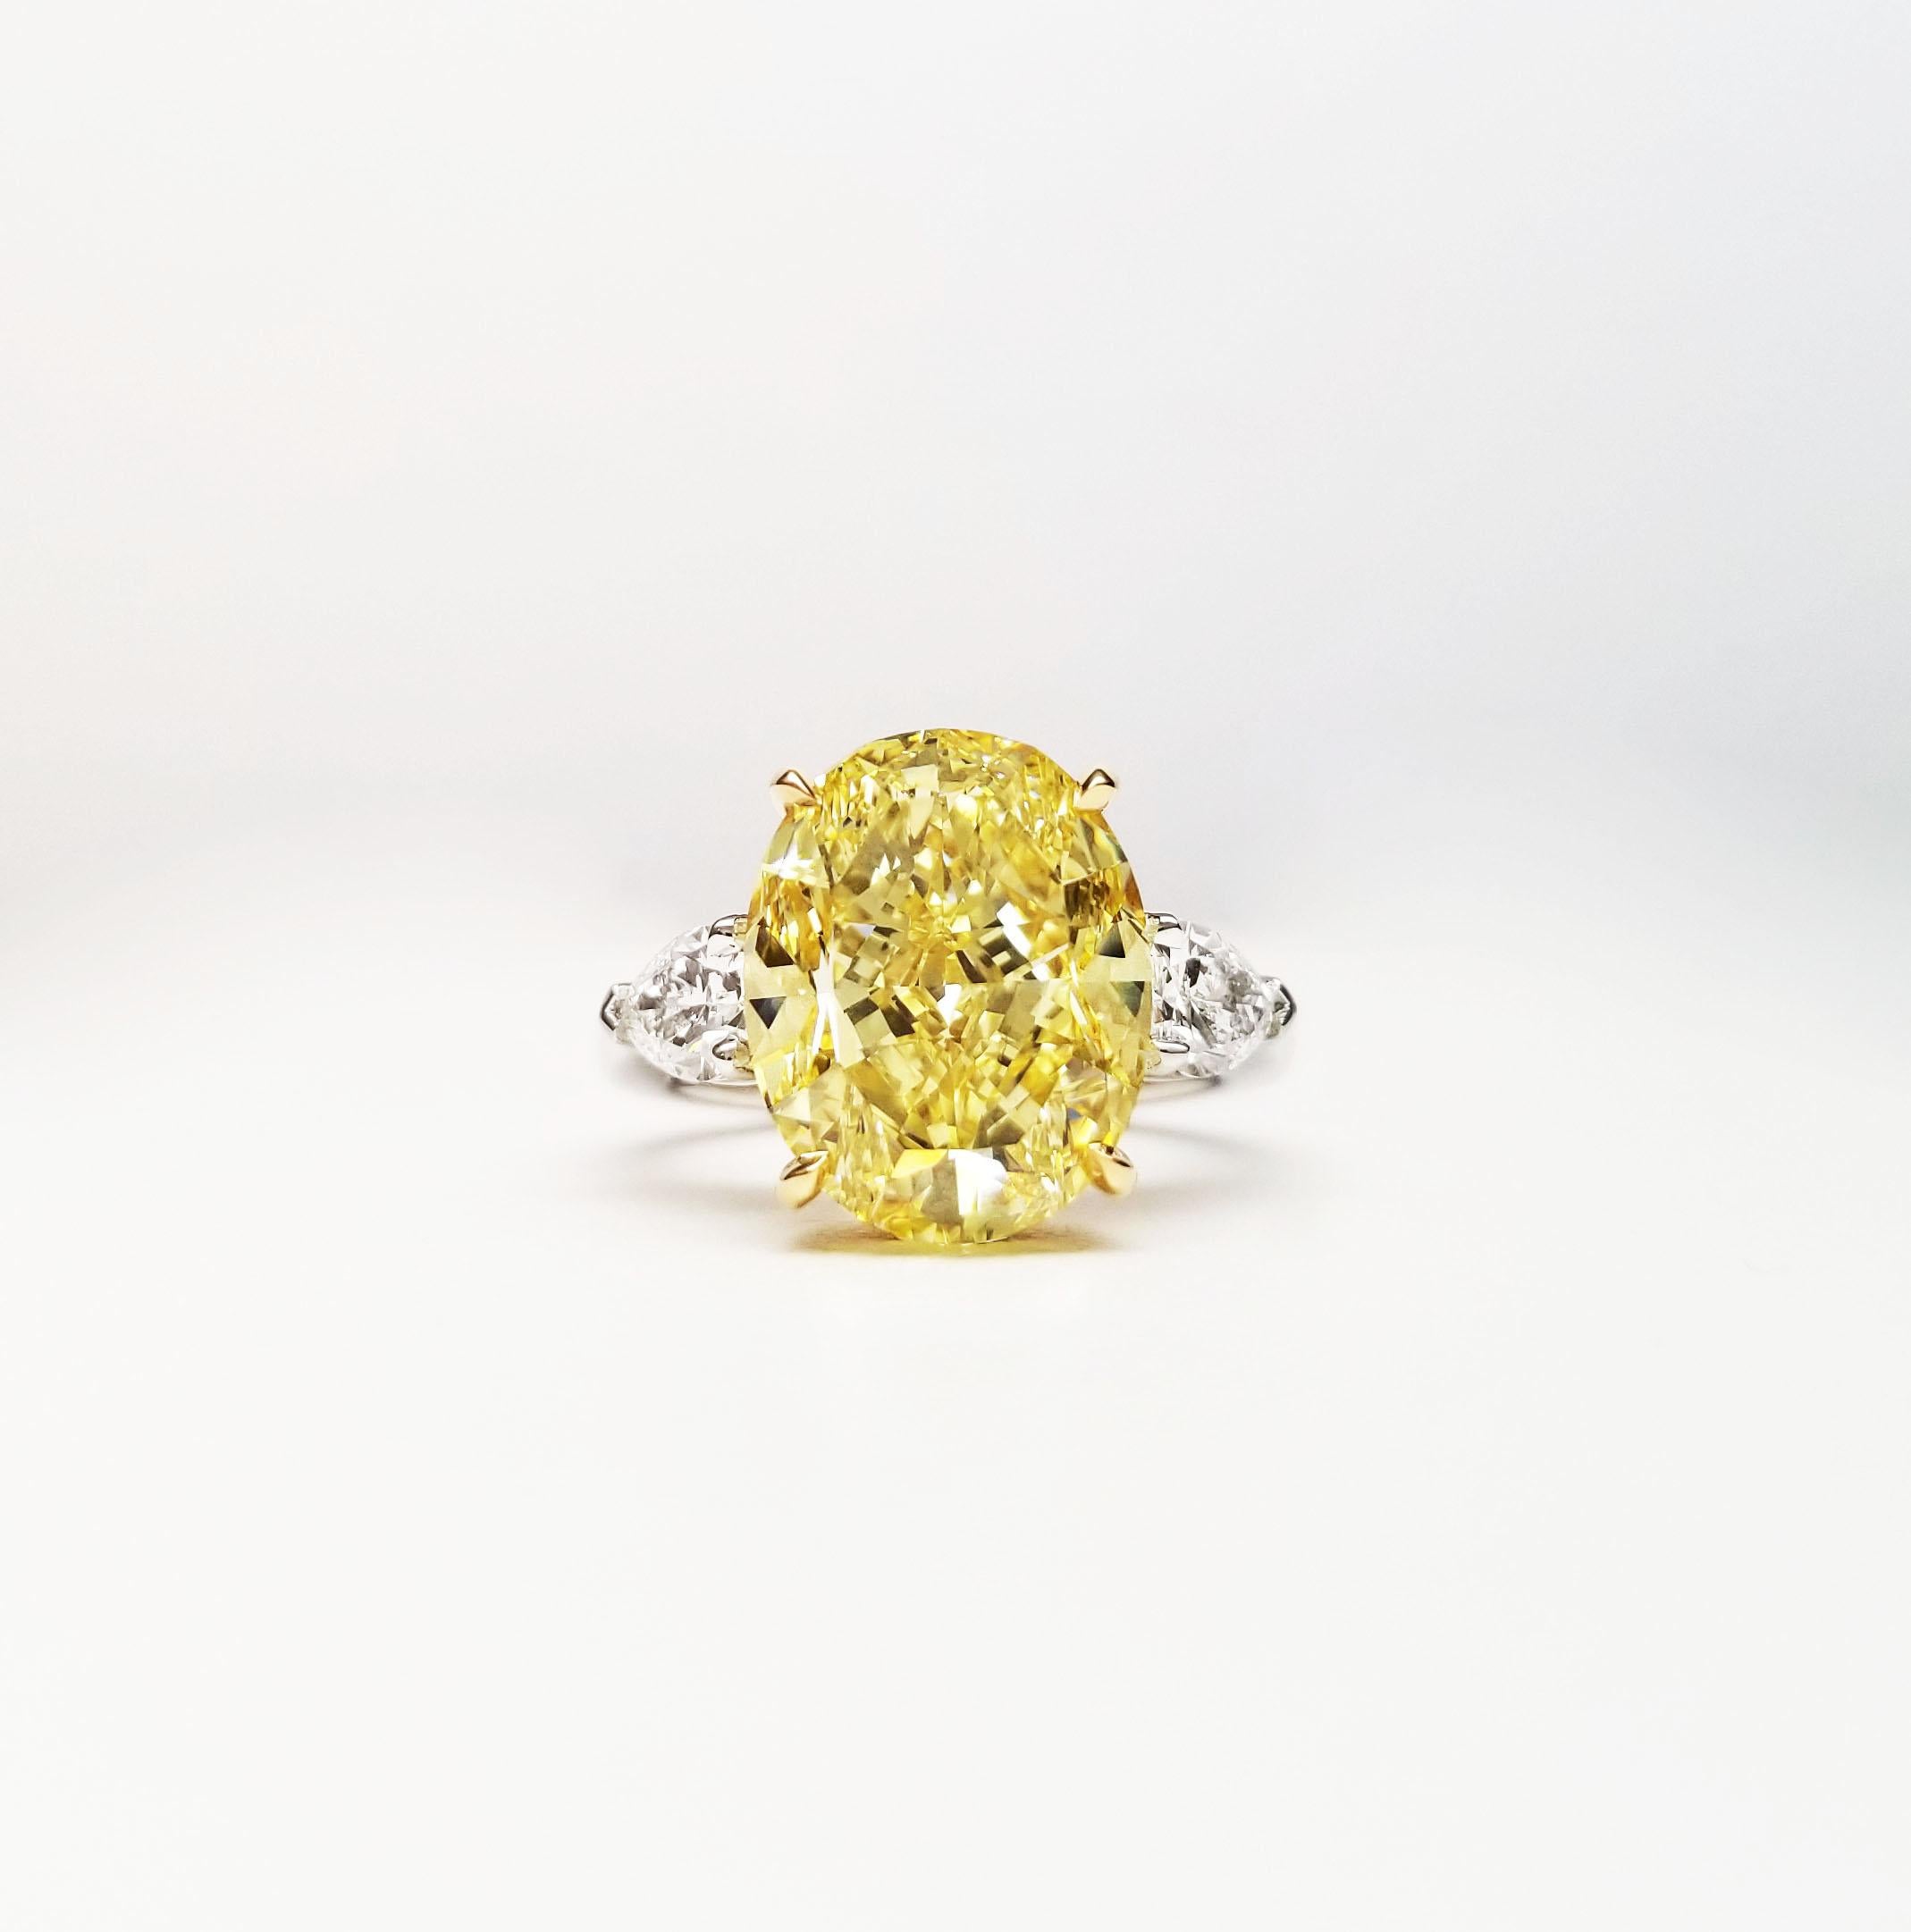 Scarselli 8 Carat Fancy Intense Yellow Diamond GIA in a Platinum Engagement Ring 1